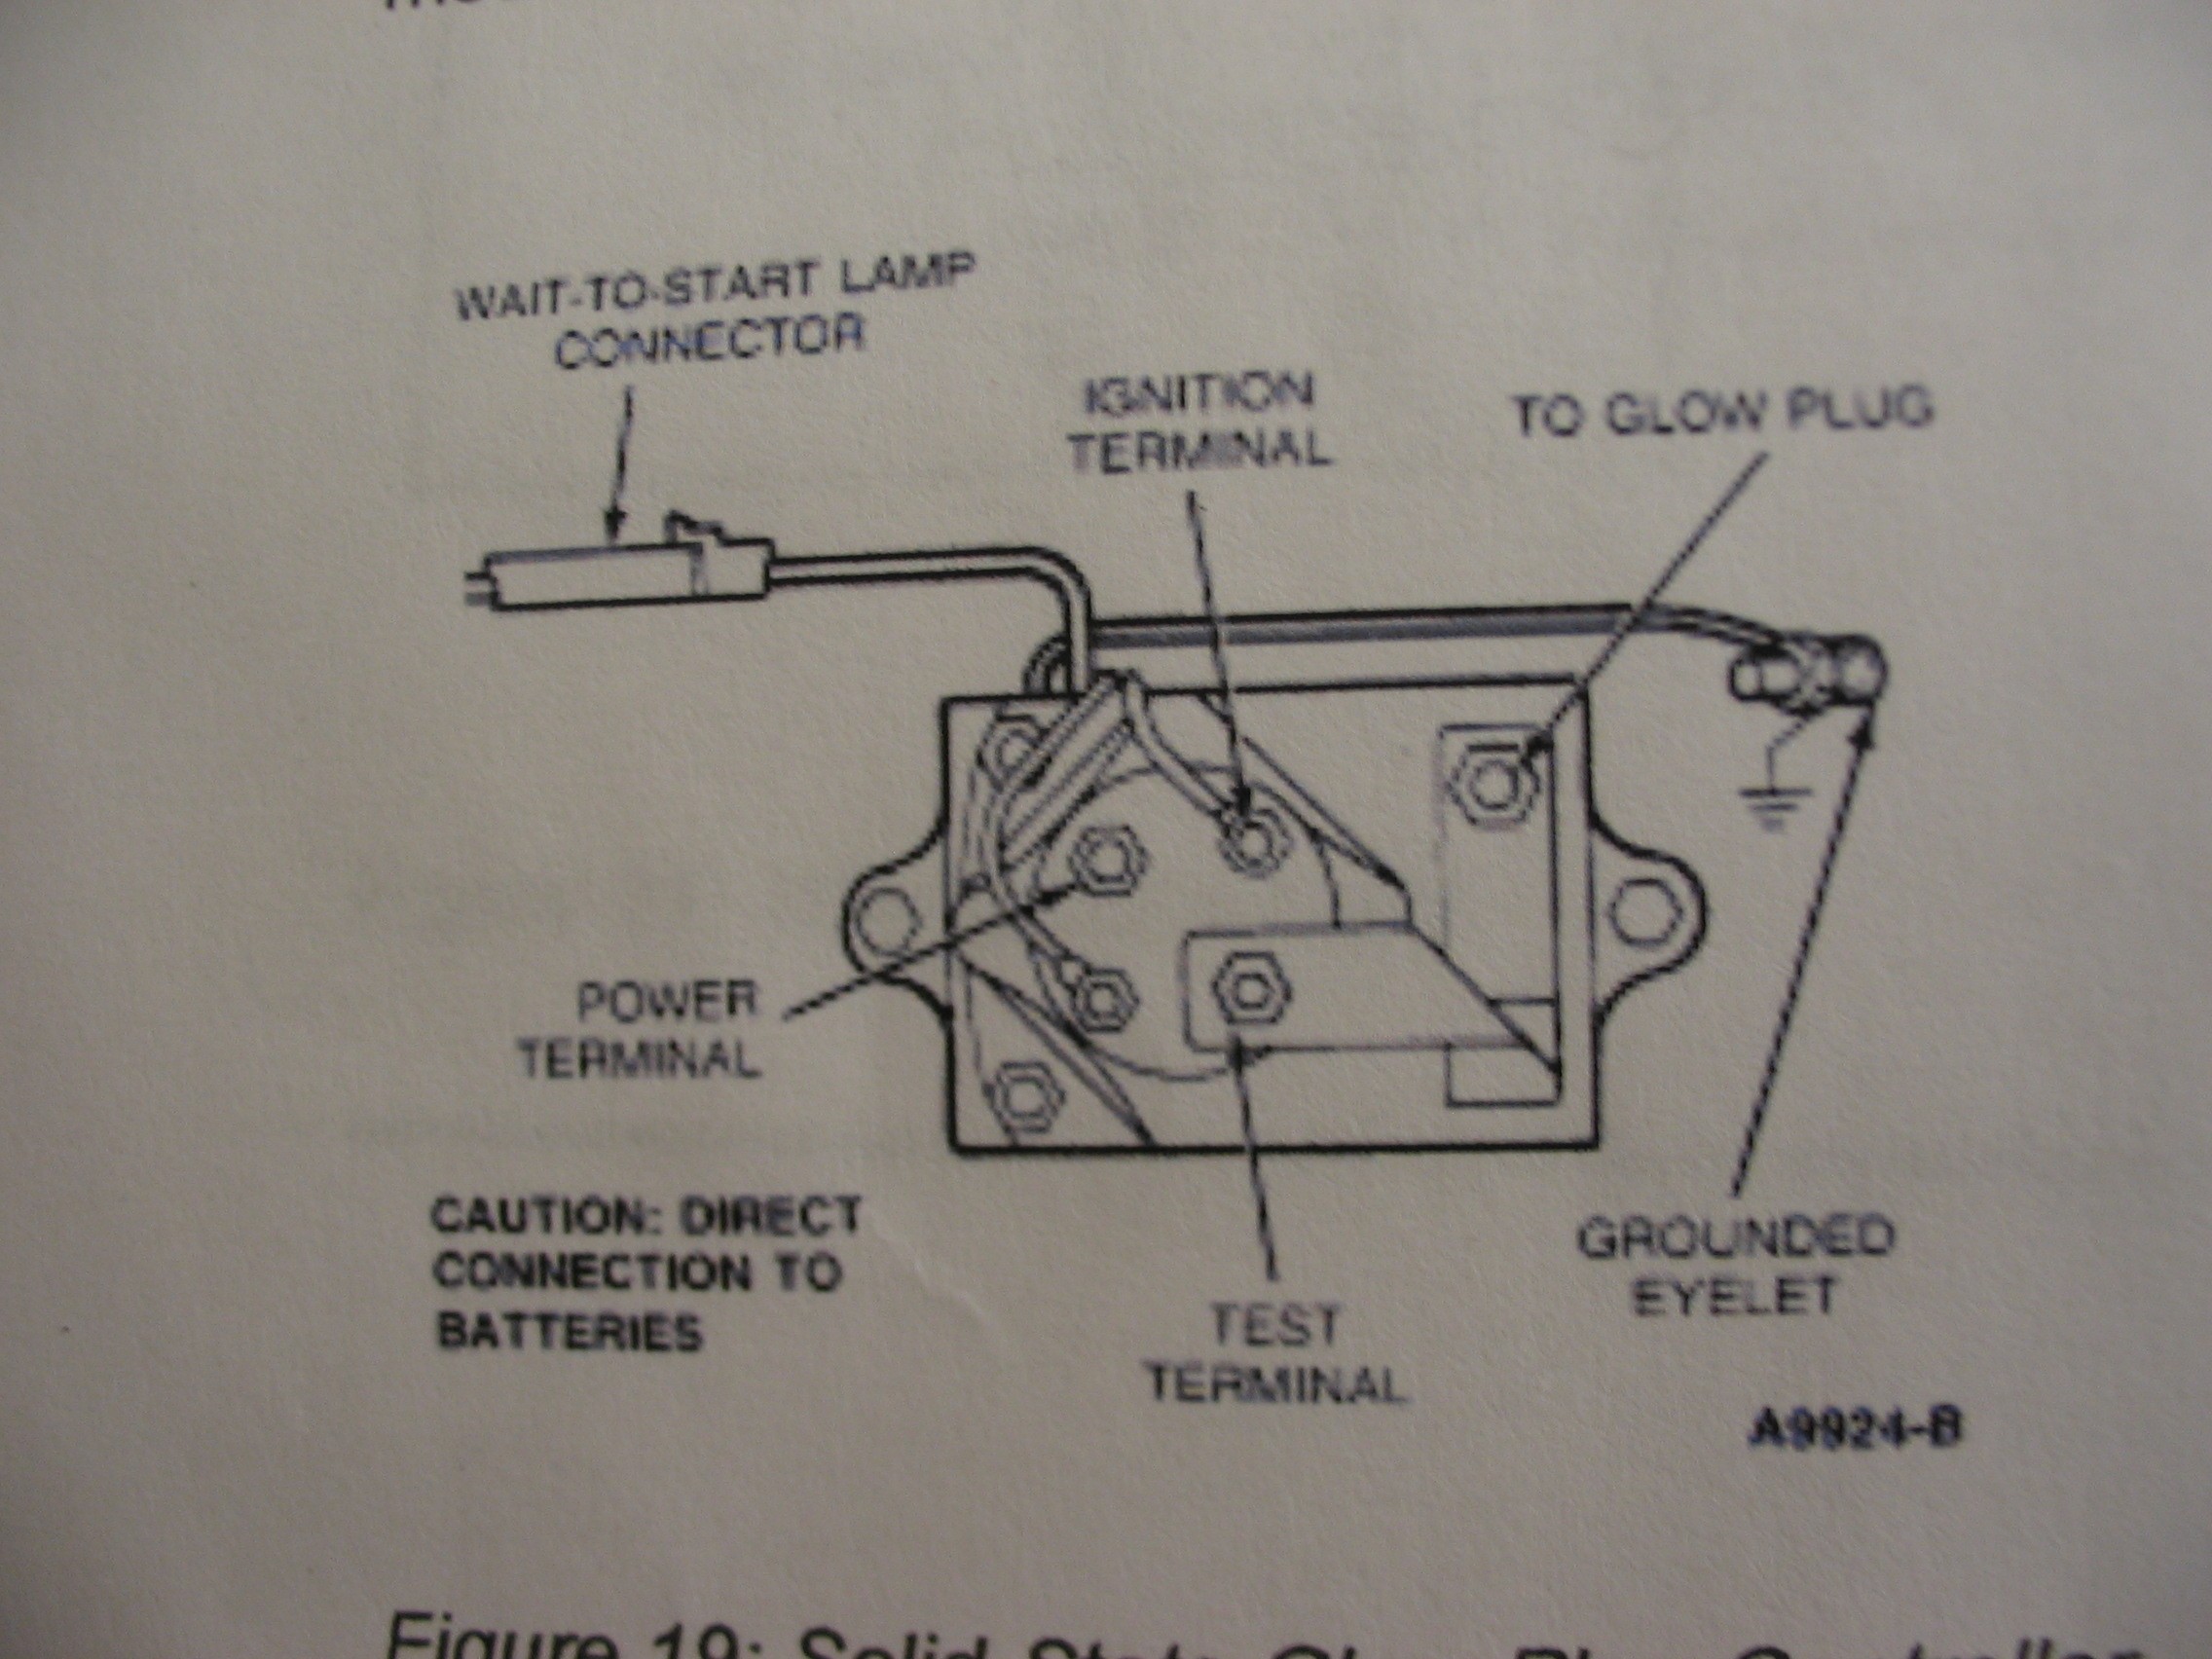 Idi Glow Plug Controller Diagram | My Wiring DIagram